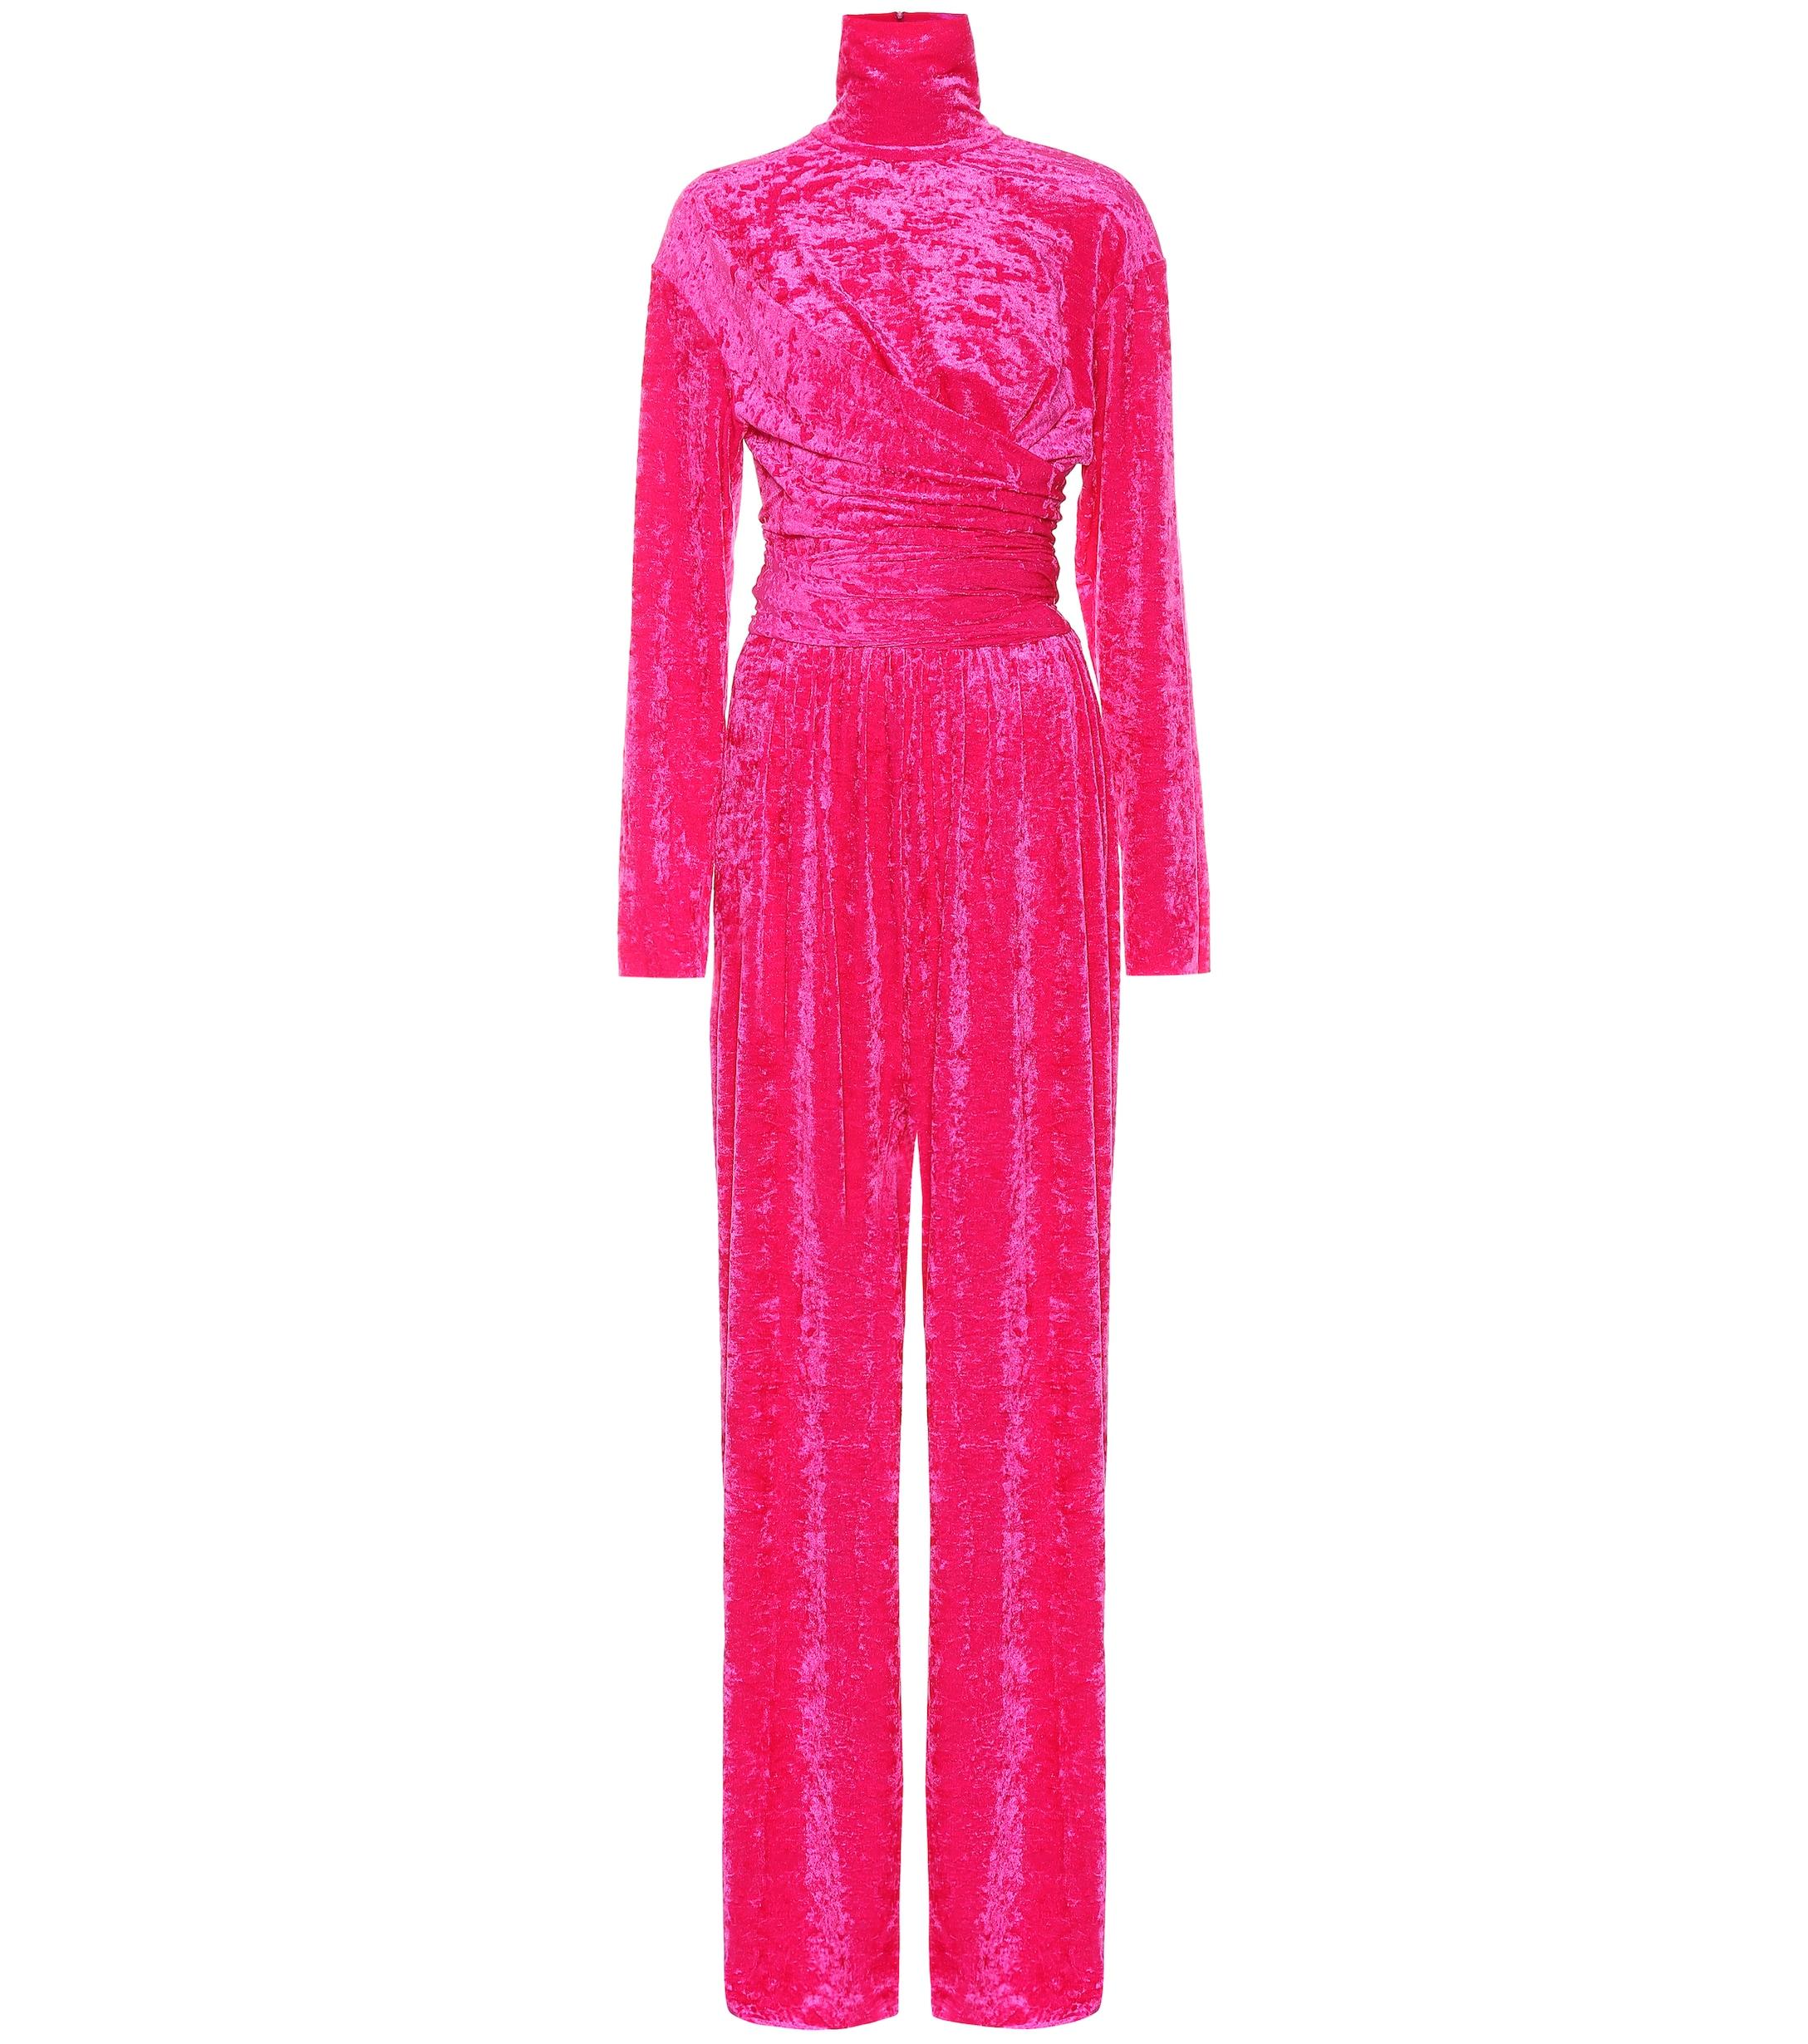 Balenciaga Crushed-velvet Turtleneck Jumpsuit in Fuchsia (Pink) - Lyst